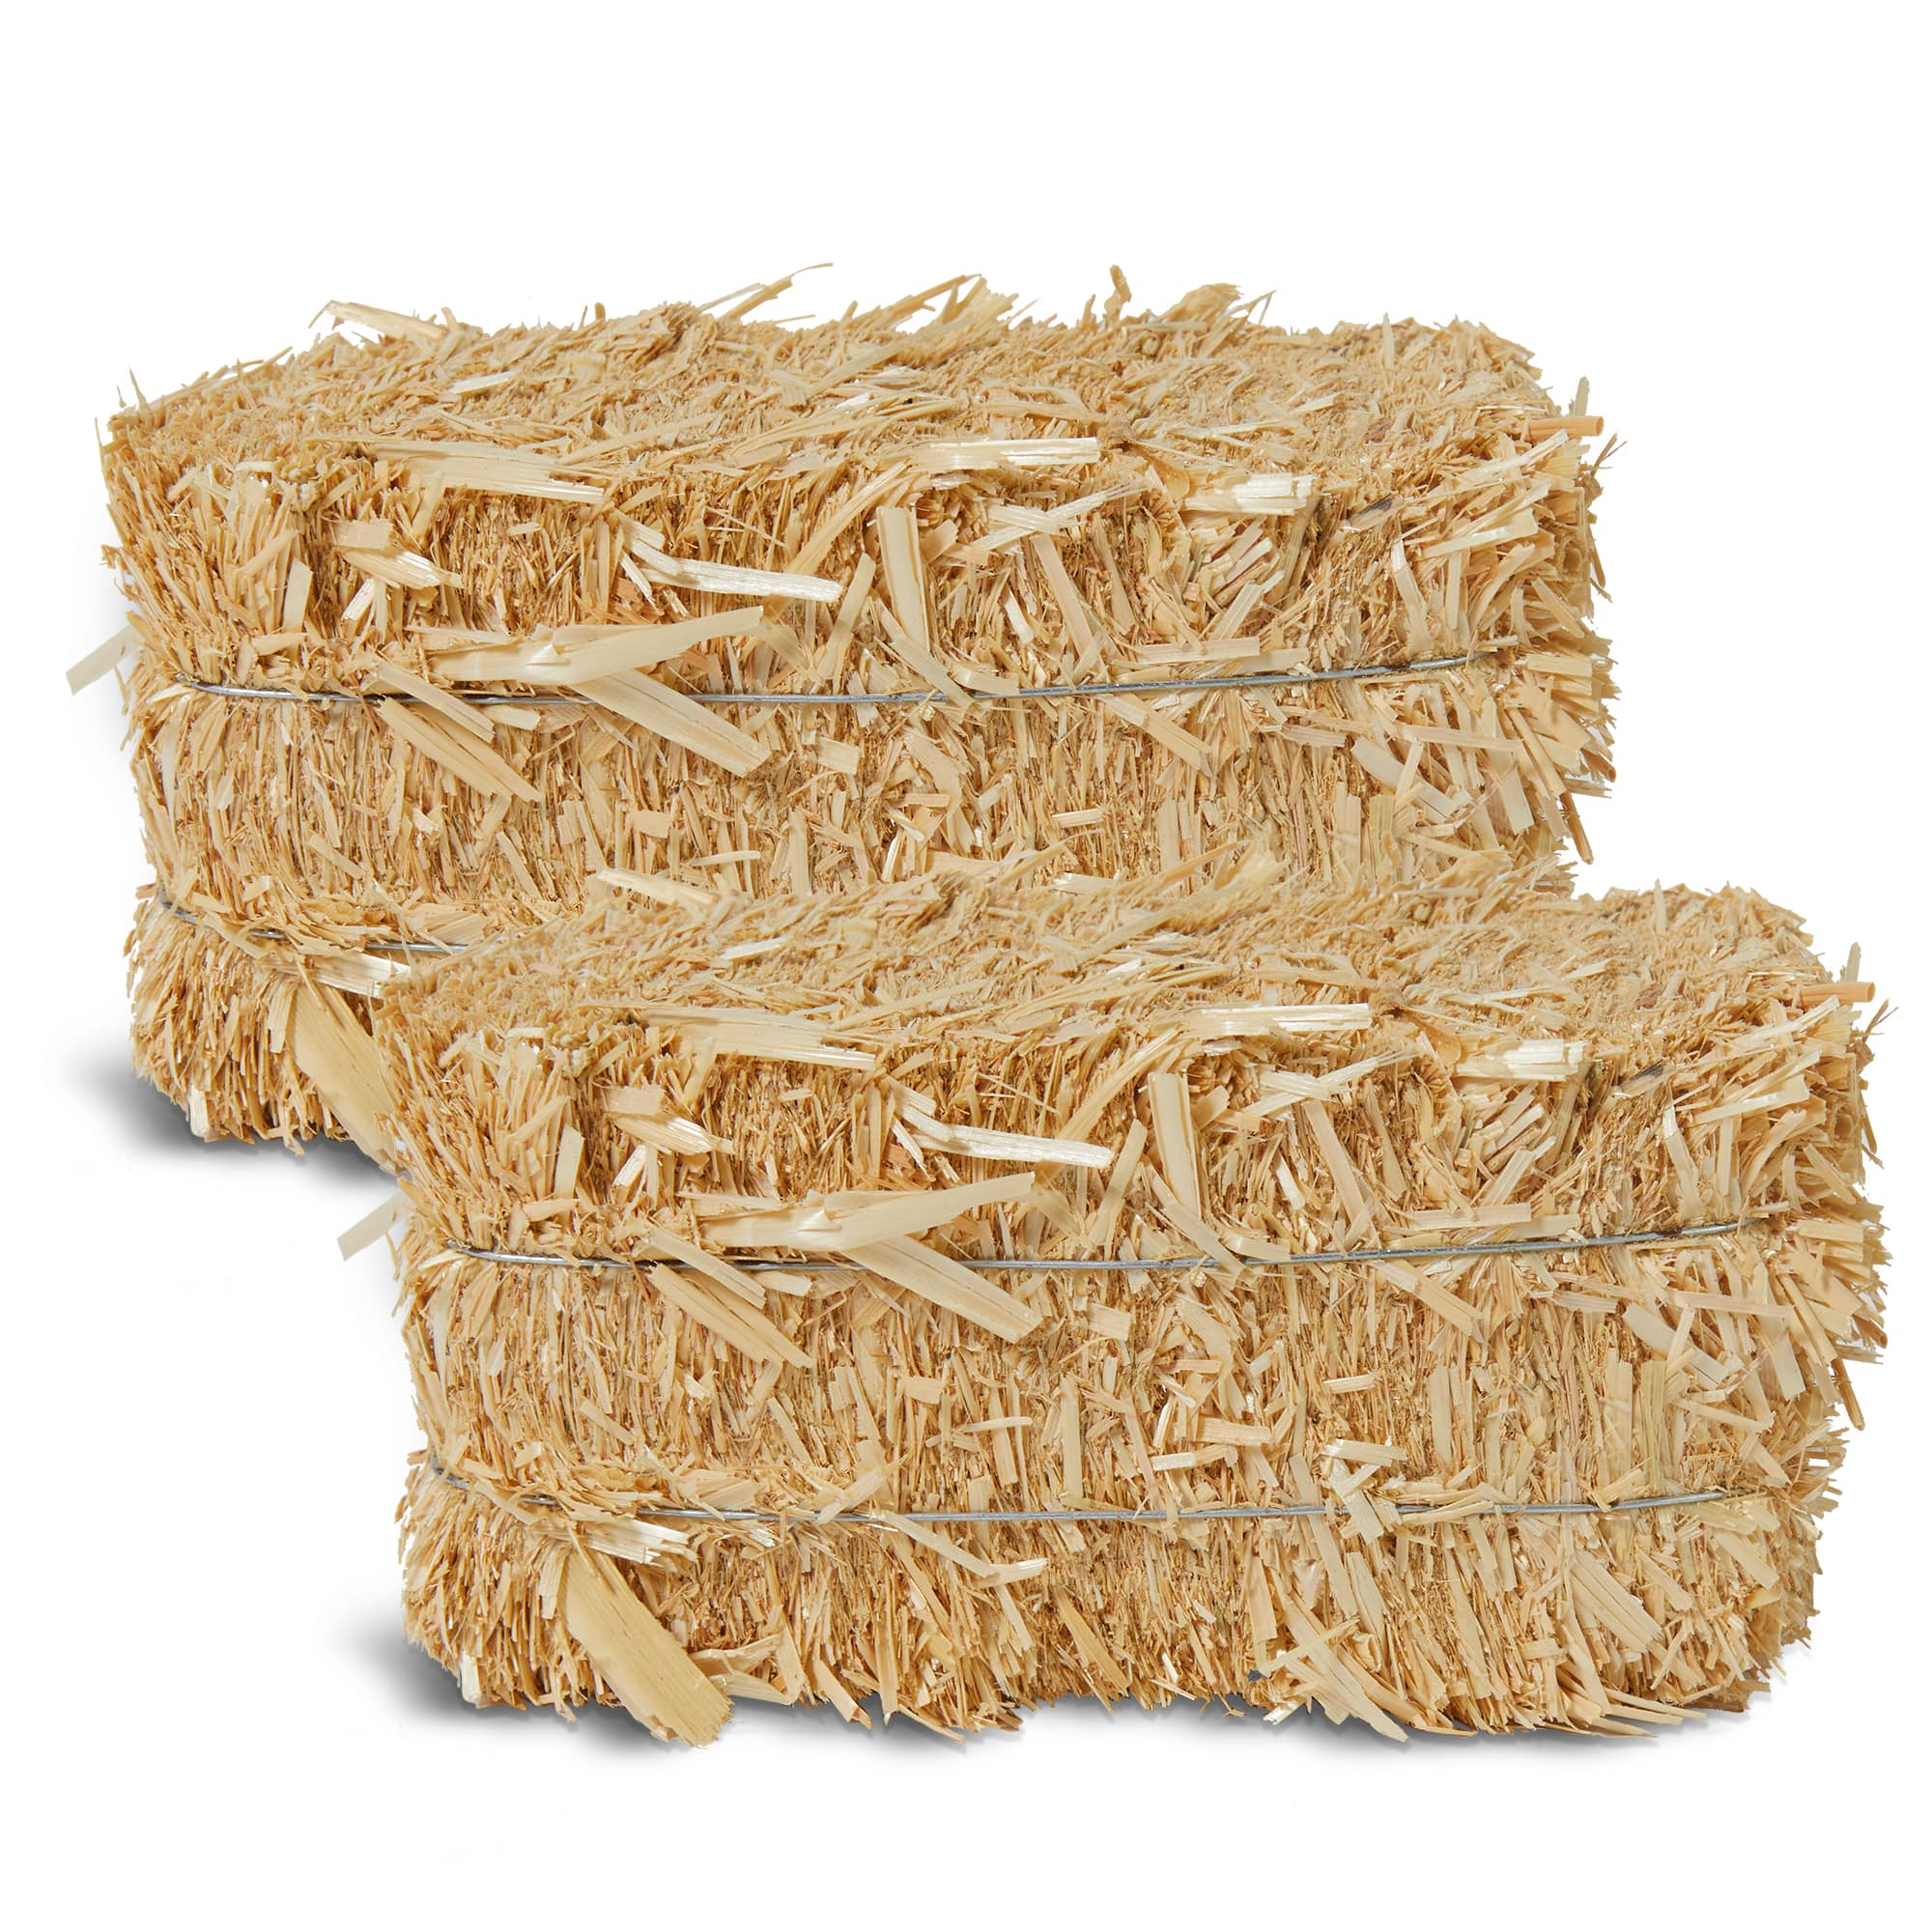 2-Tie Straw Hay Bale